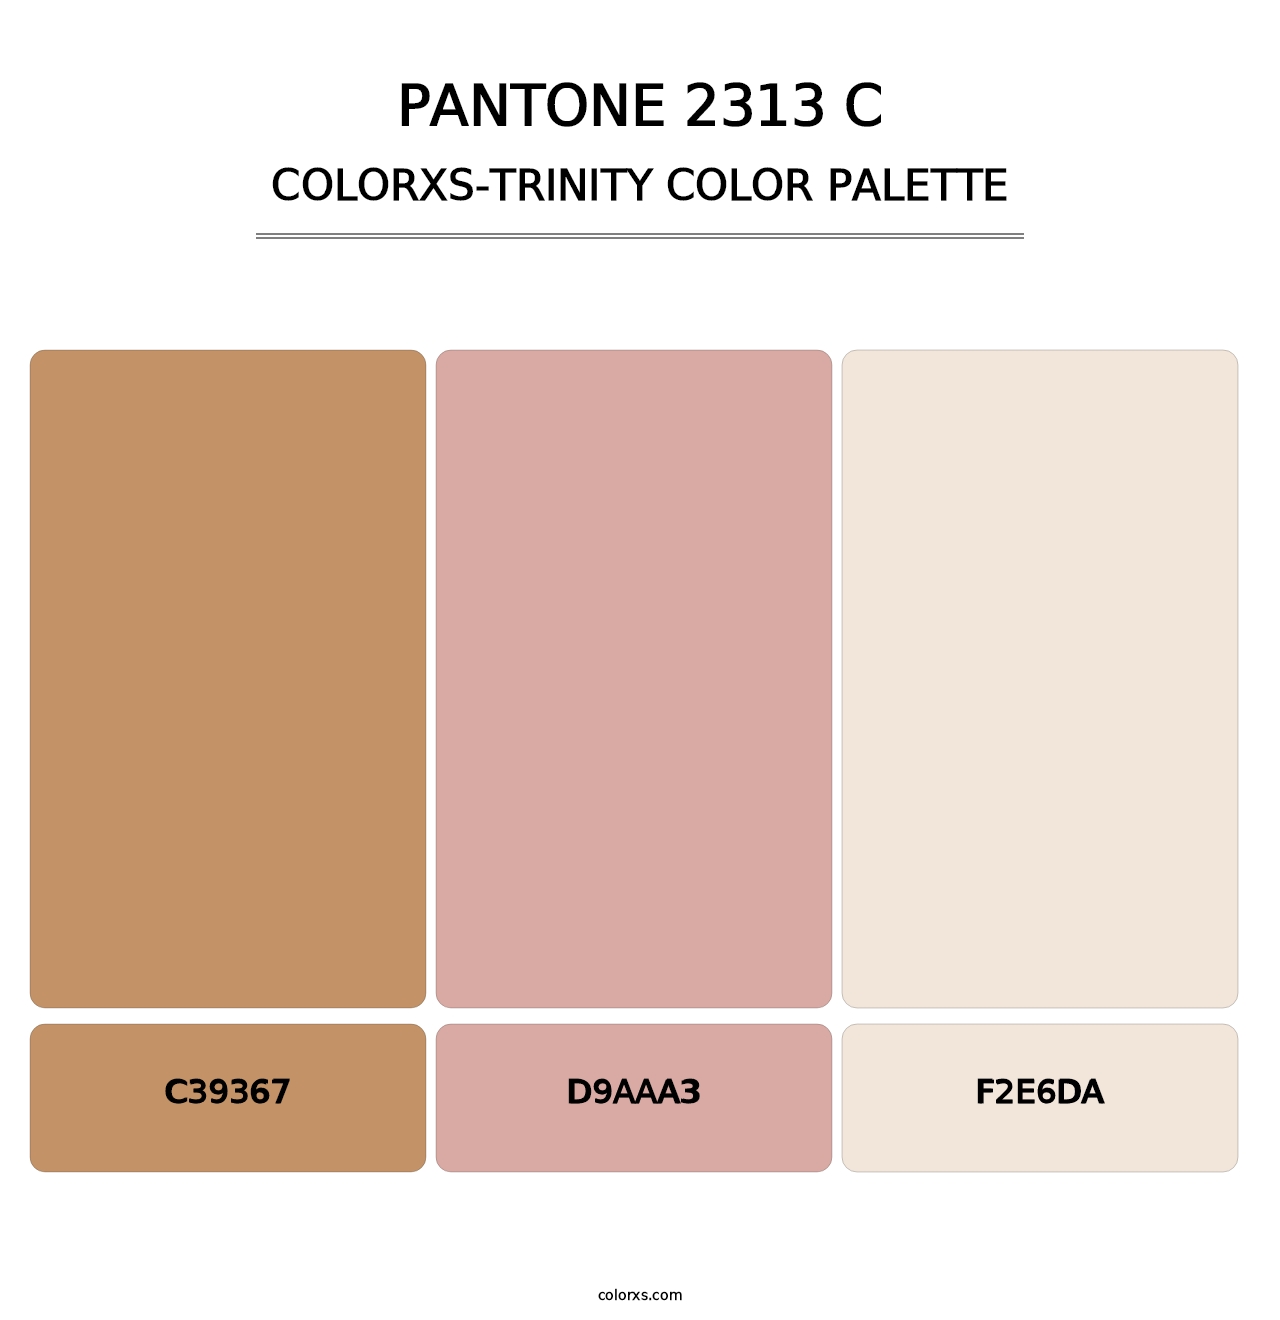 PANTONE 2313 C - Colorxs Trinity Palette